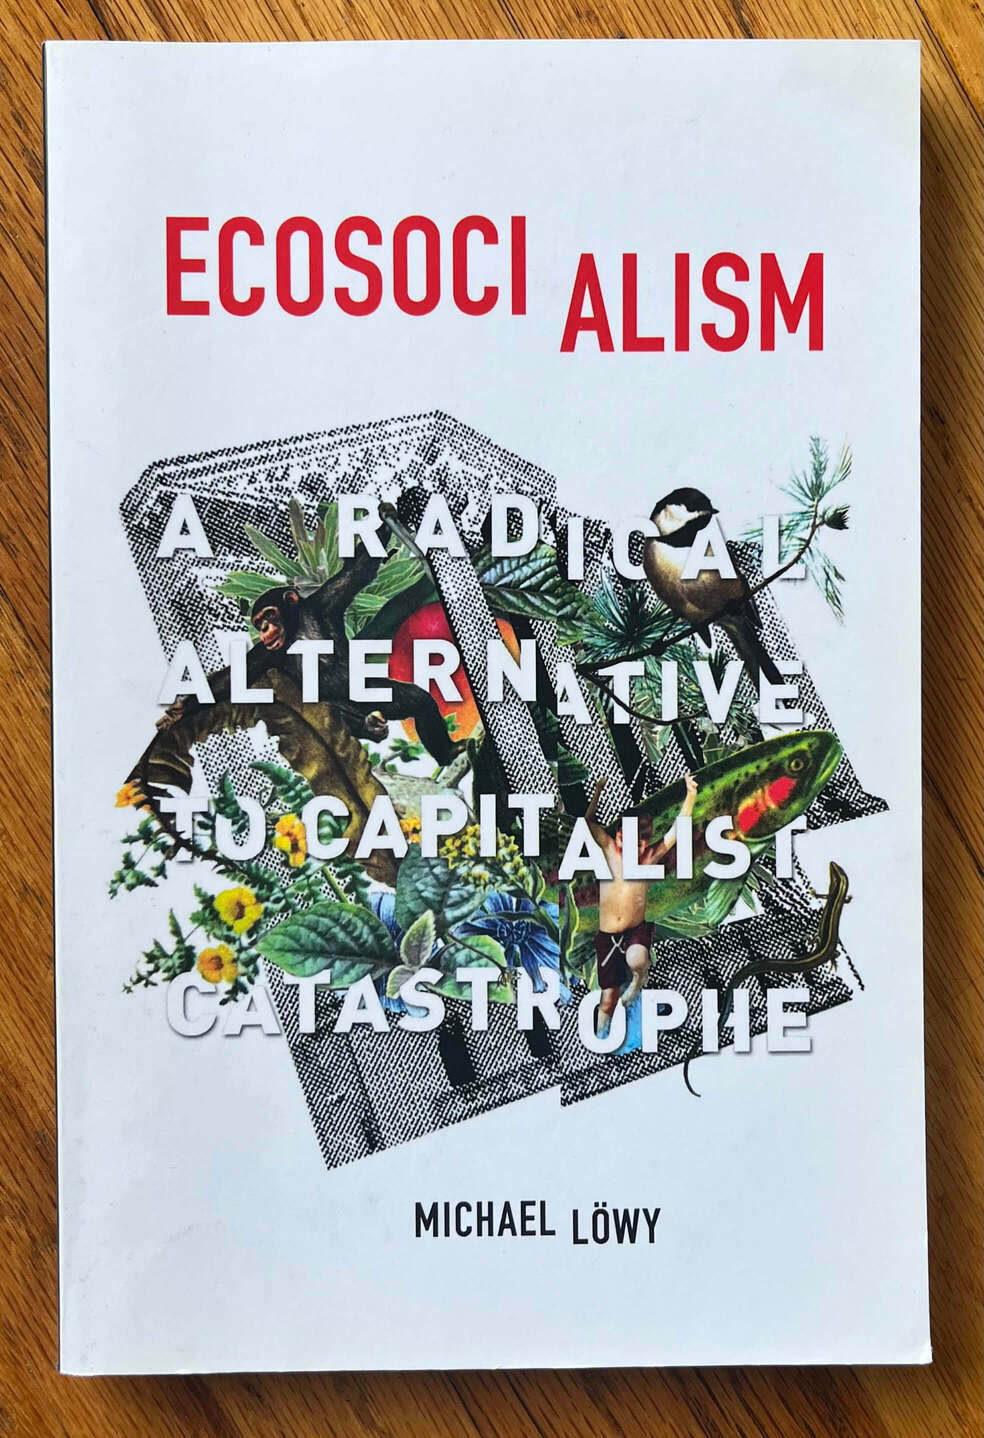 “Ecosocialism: A Radical Alternative to Capitalist Catastrophe” by Michael Löwy.